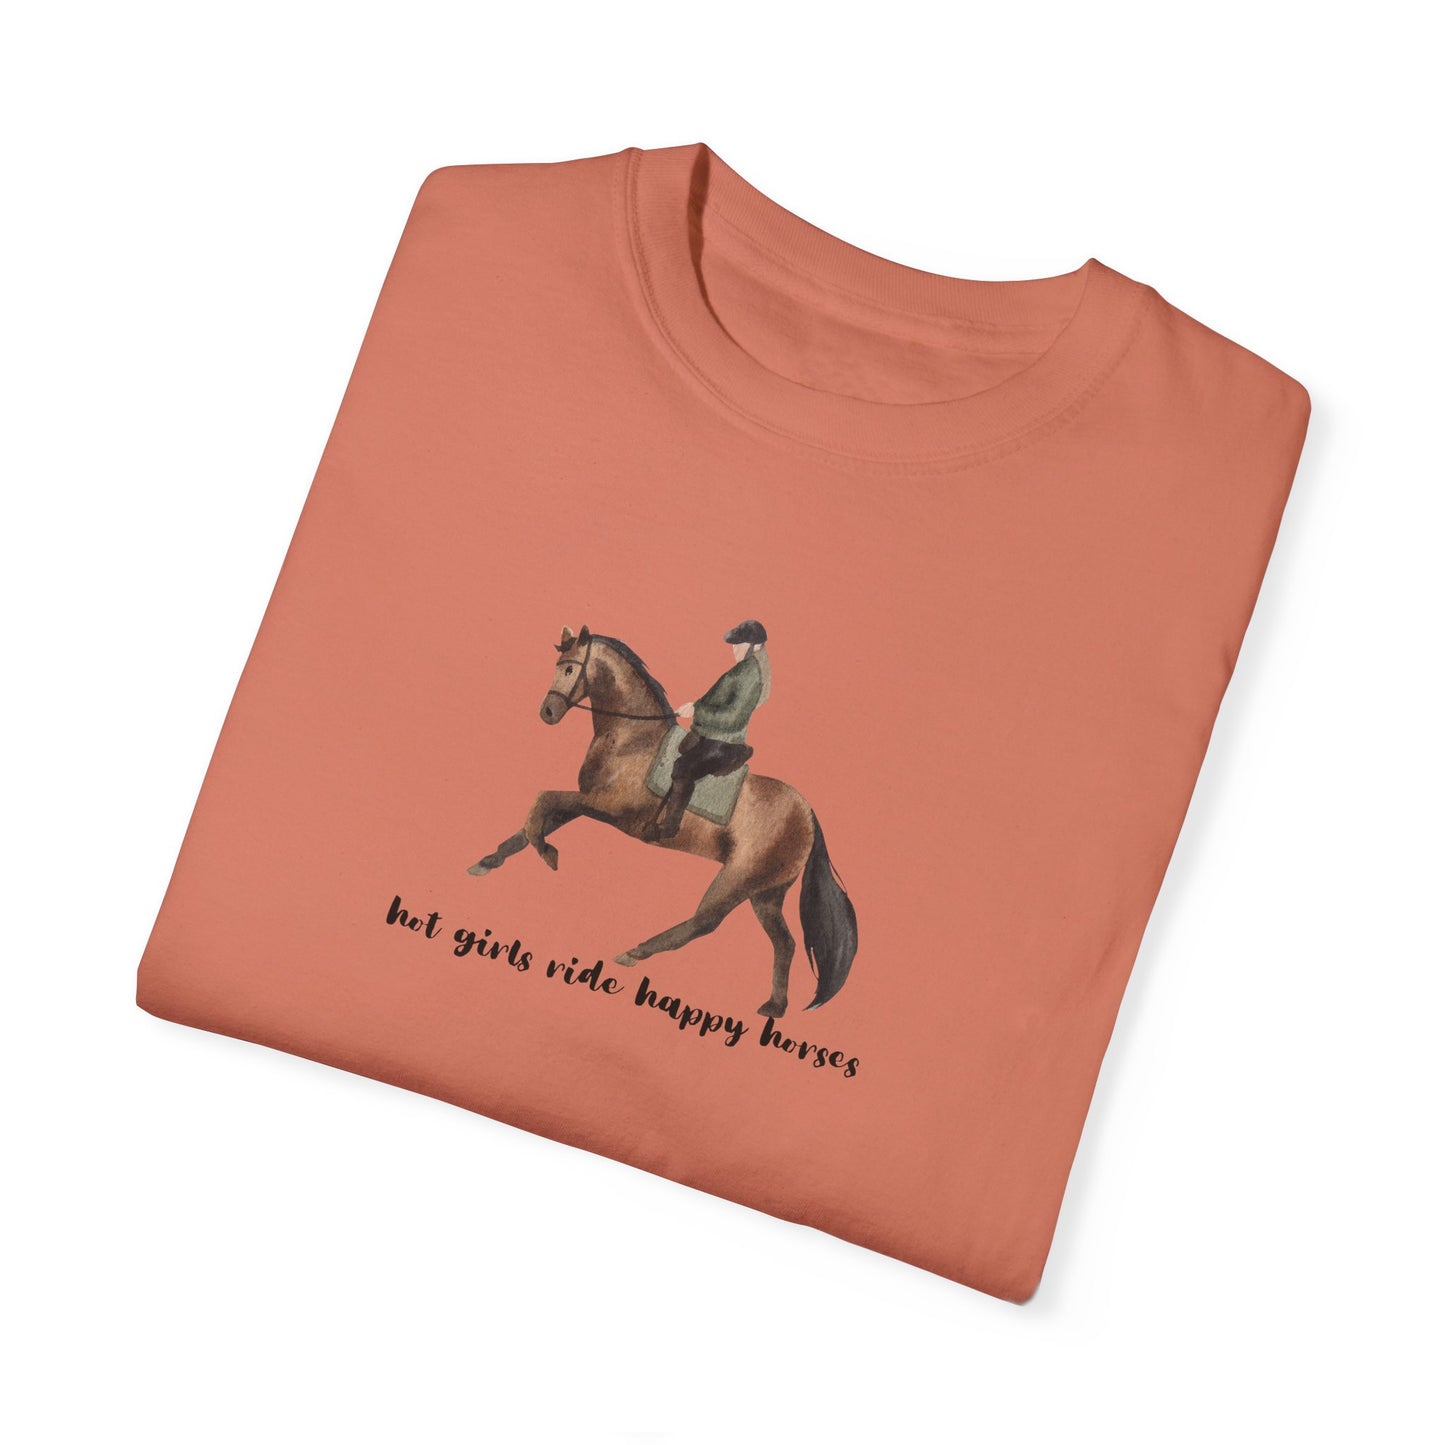 Hot Girls Ride Happy Horses (Dressage) T-shirt